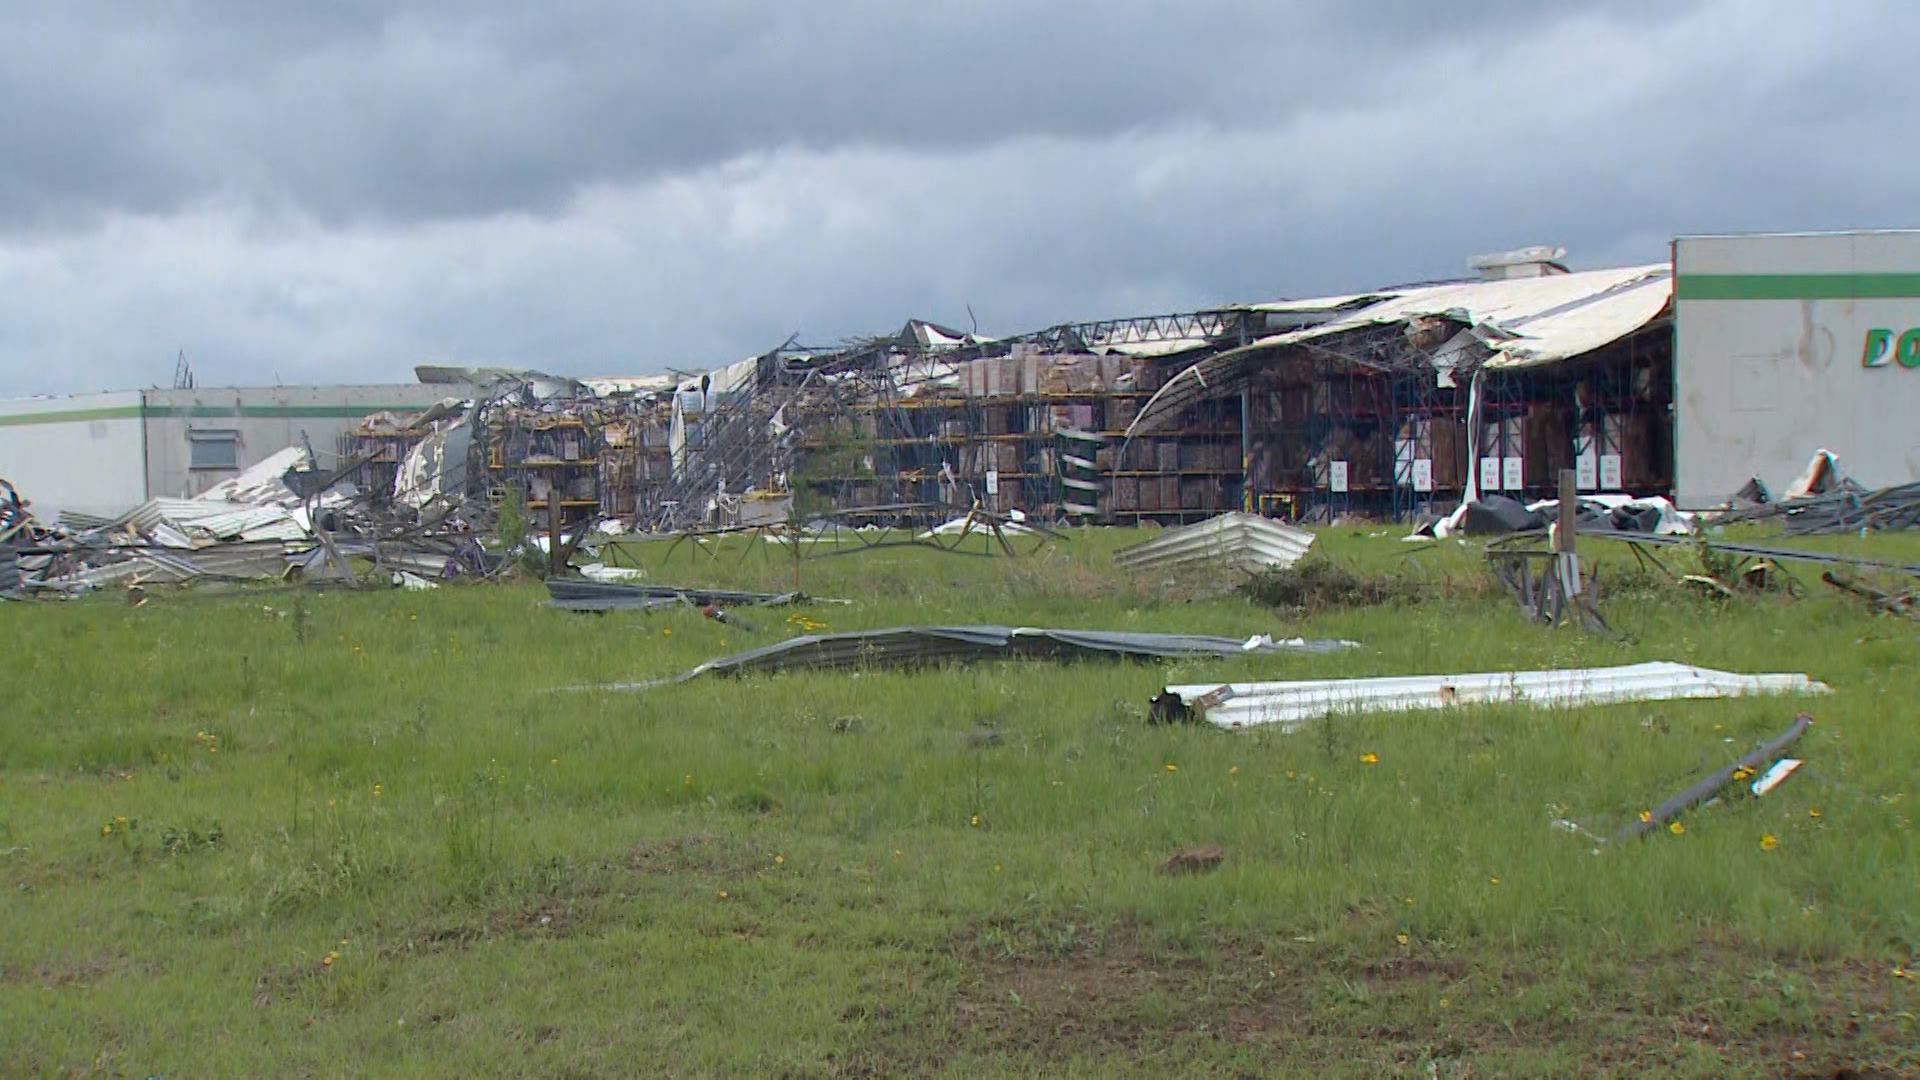 A Dollar Tree distribution center in Marietta, Okla was destroyed in tornado overnight.